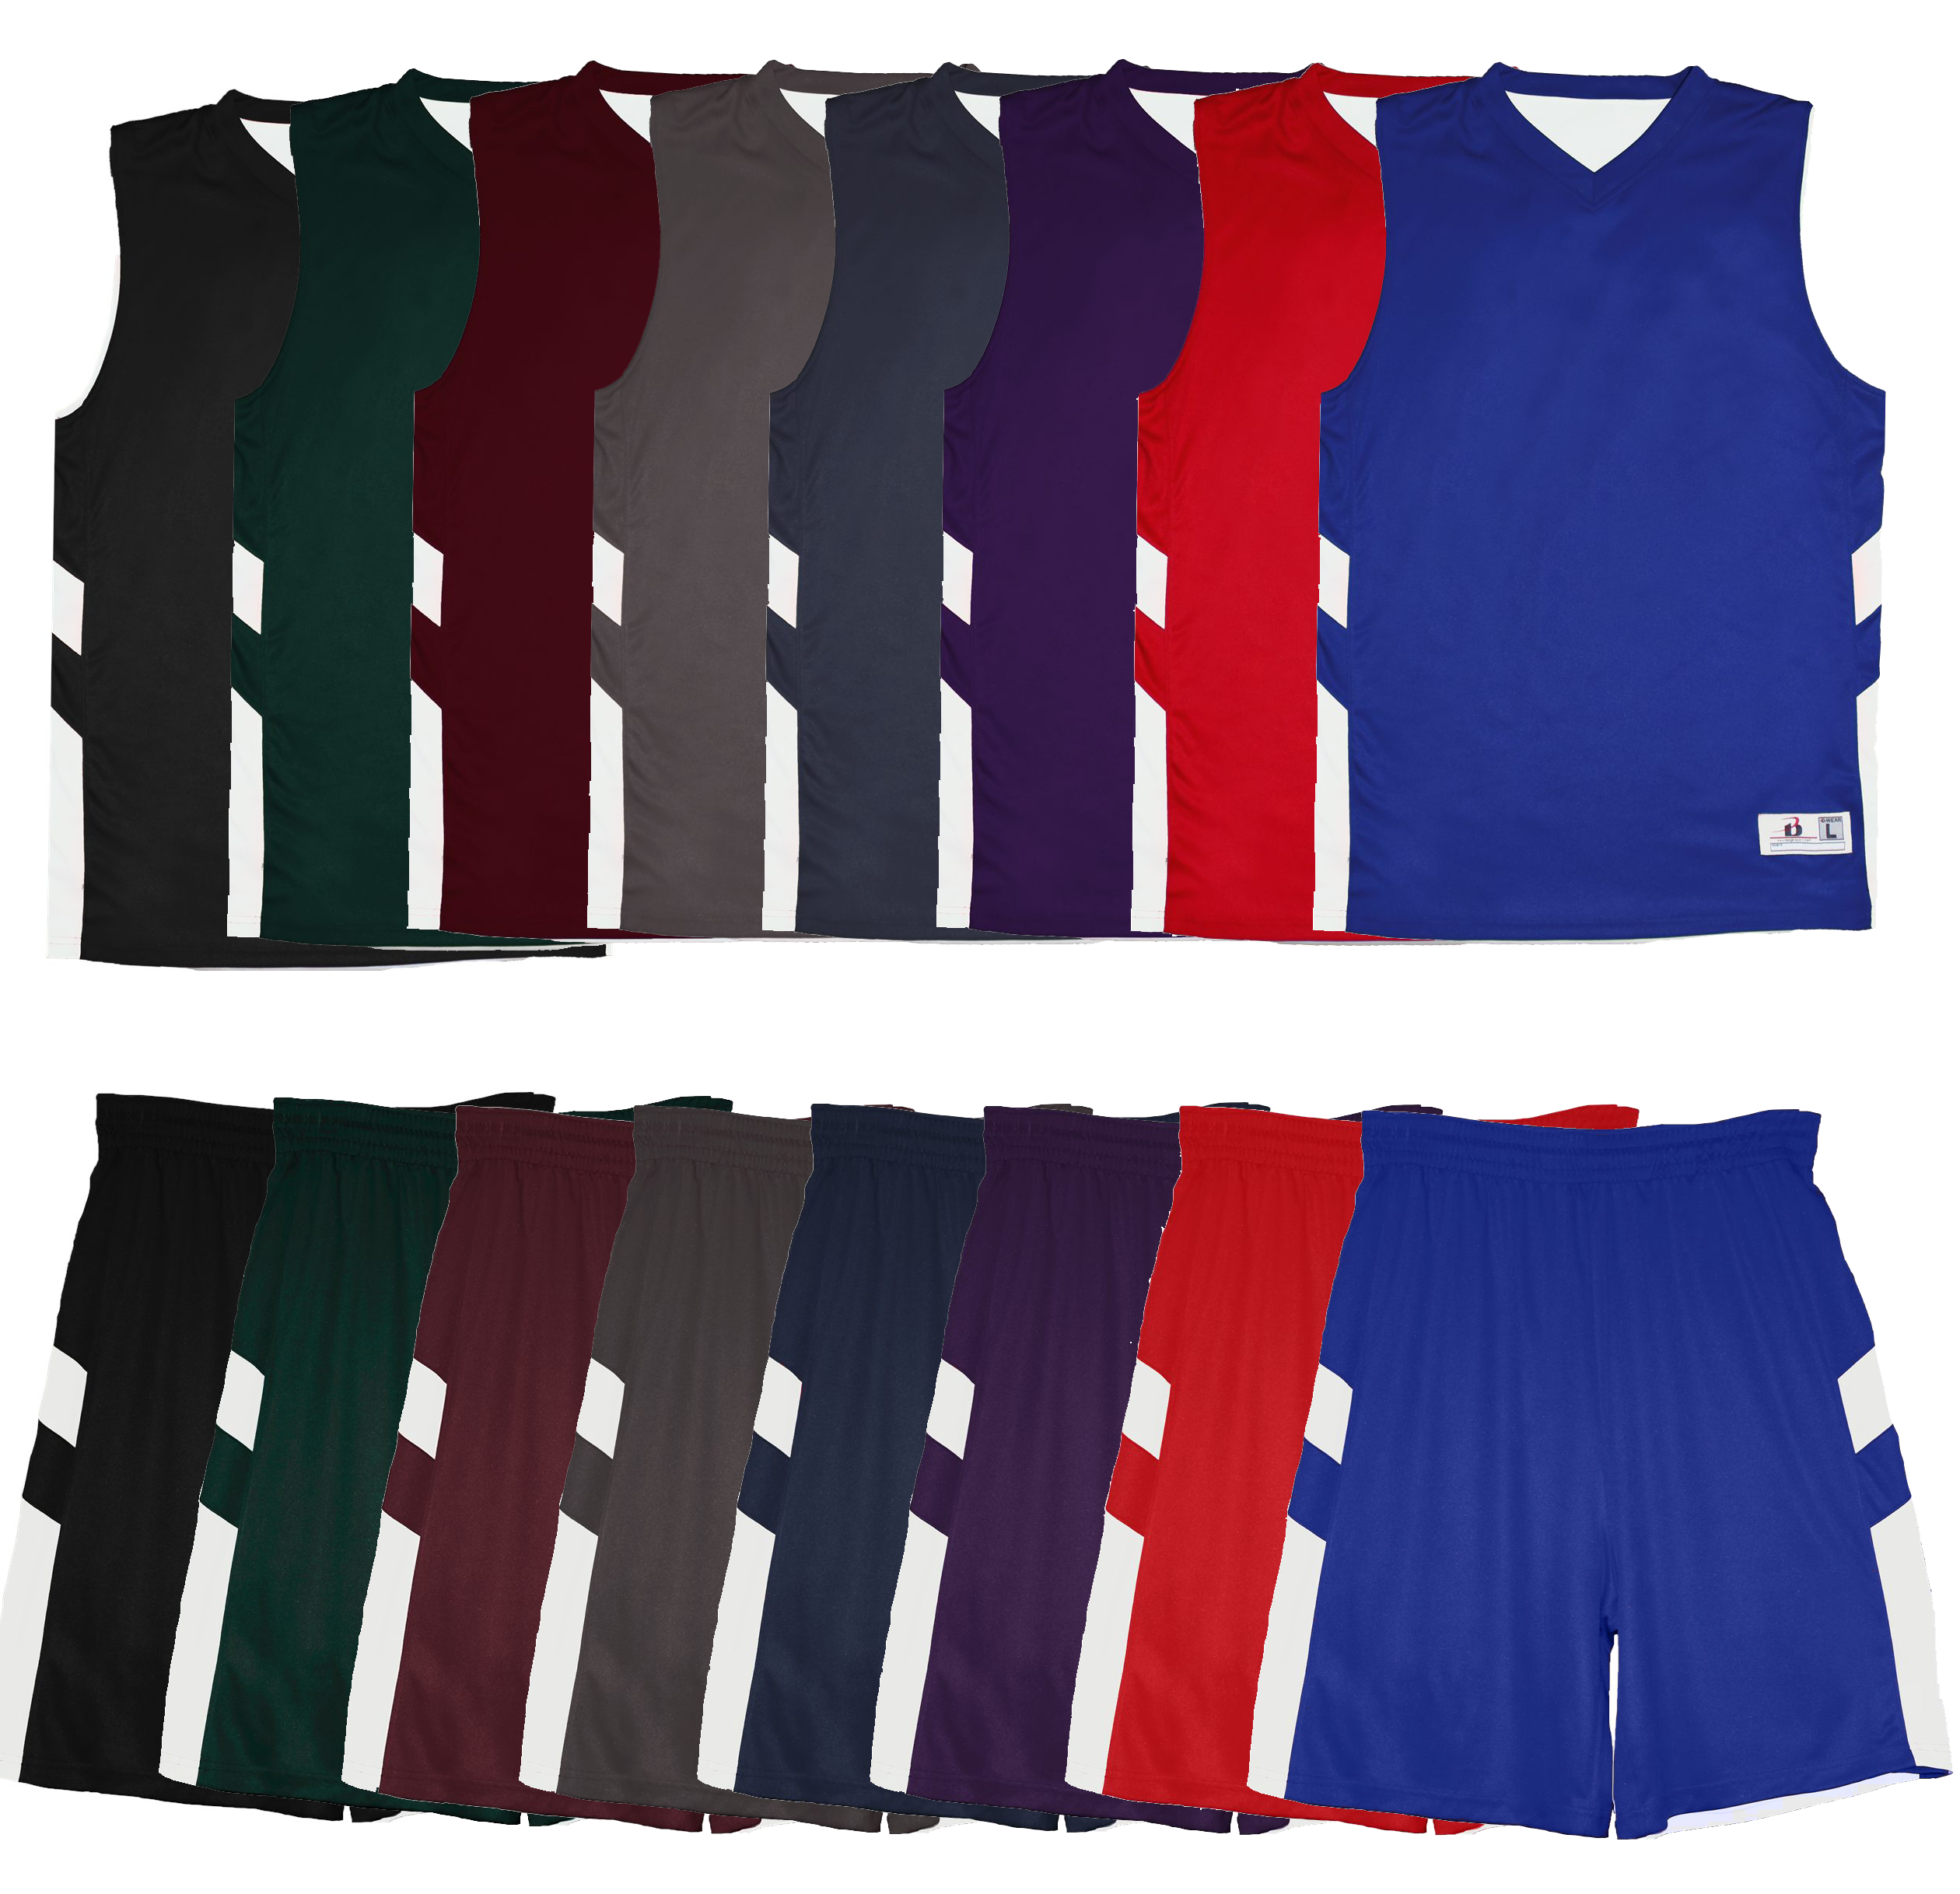 youth basketball uniforms